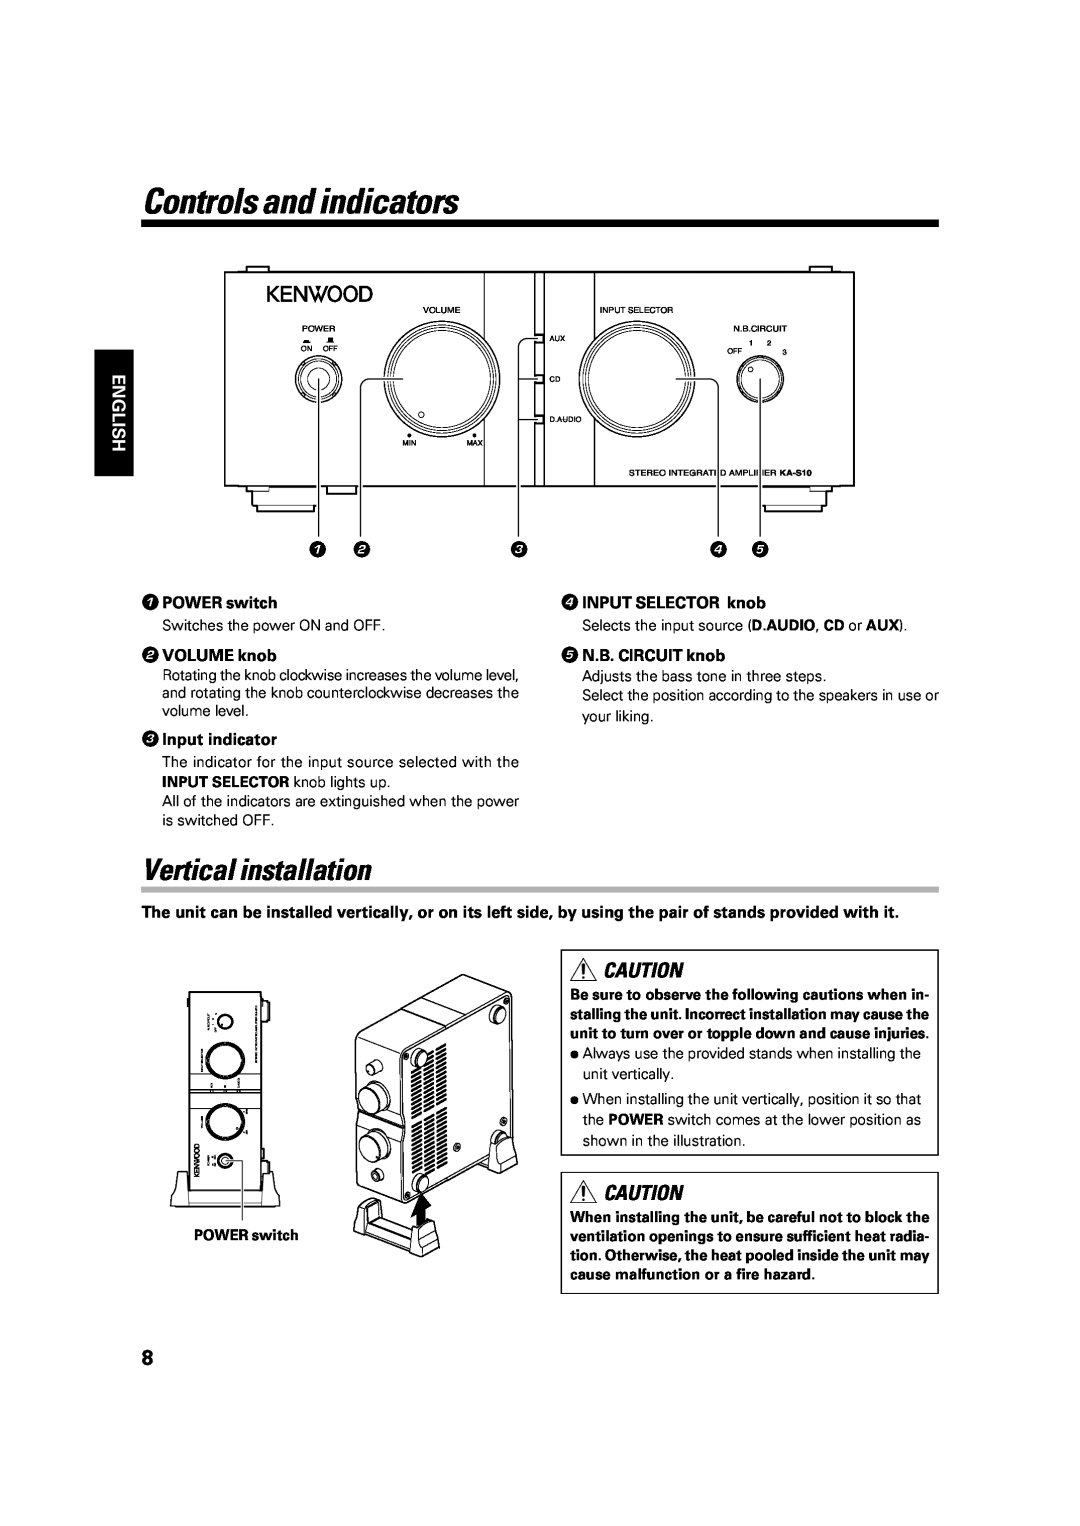 Kenwood KA-S10 Controls and indicators, Vertical installation, POWER switch, INPUT SELECTOR knob, VOLUME knob, English 